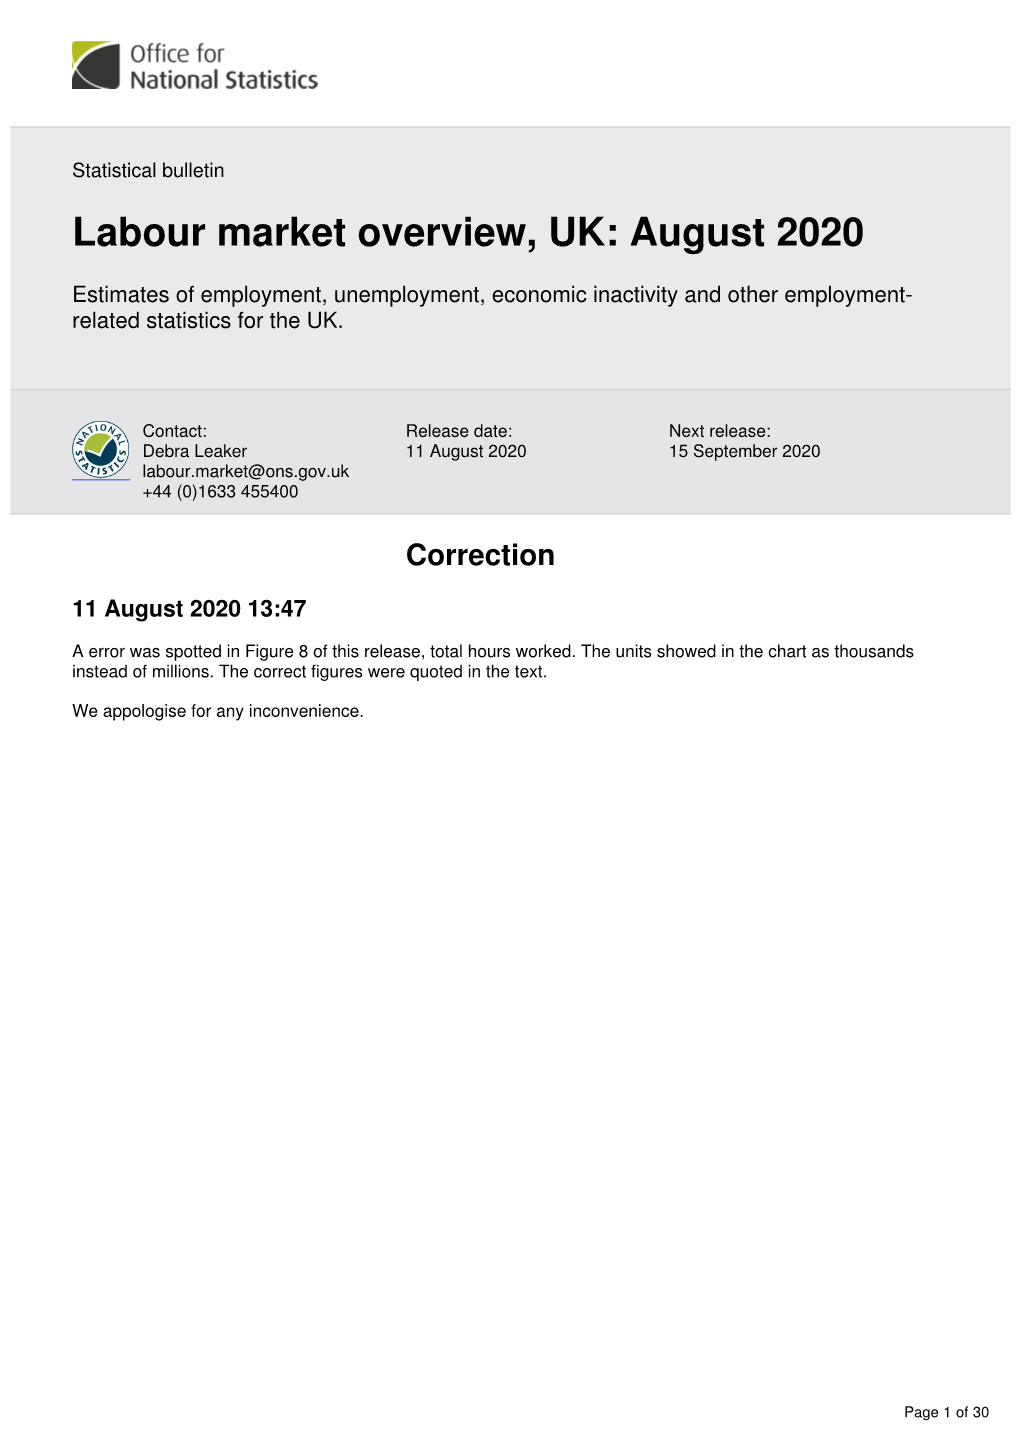 Labour Market Overview, UK: August 2020